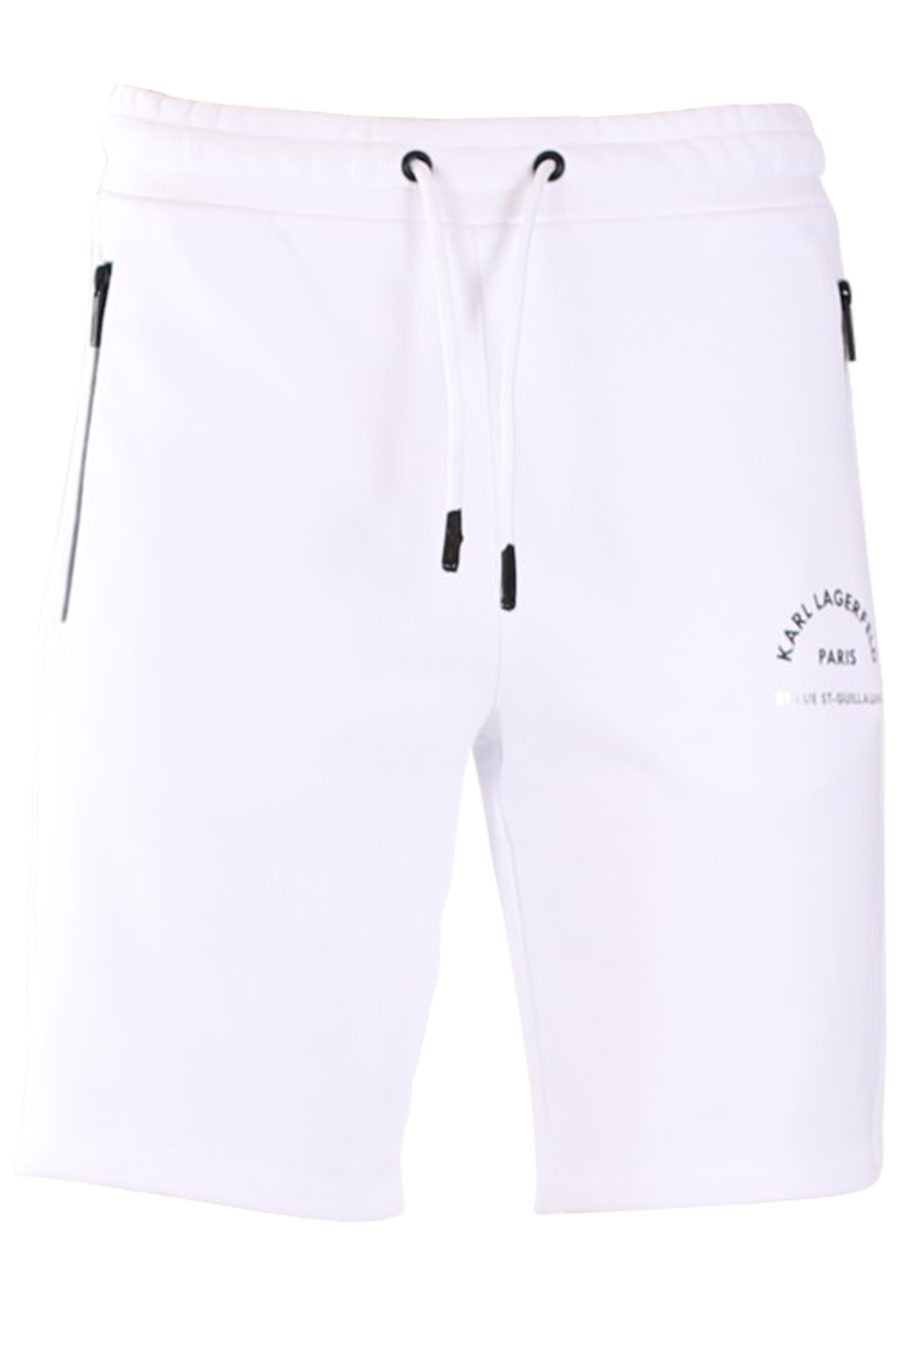 Weiße Shorts mit silbernem Logo - 161e6ecd5881a9cc0b8224c90731bc5d5b3bfd27